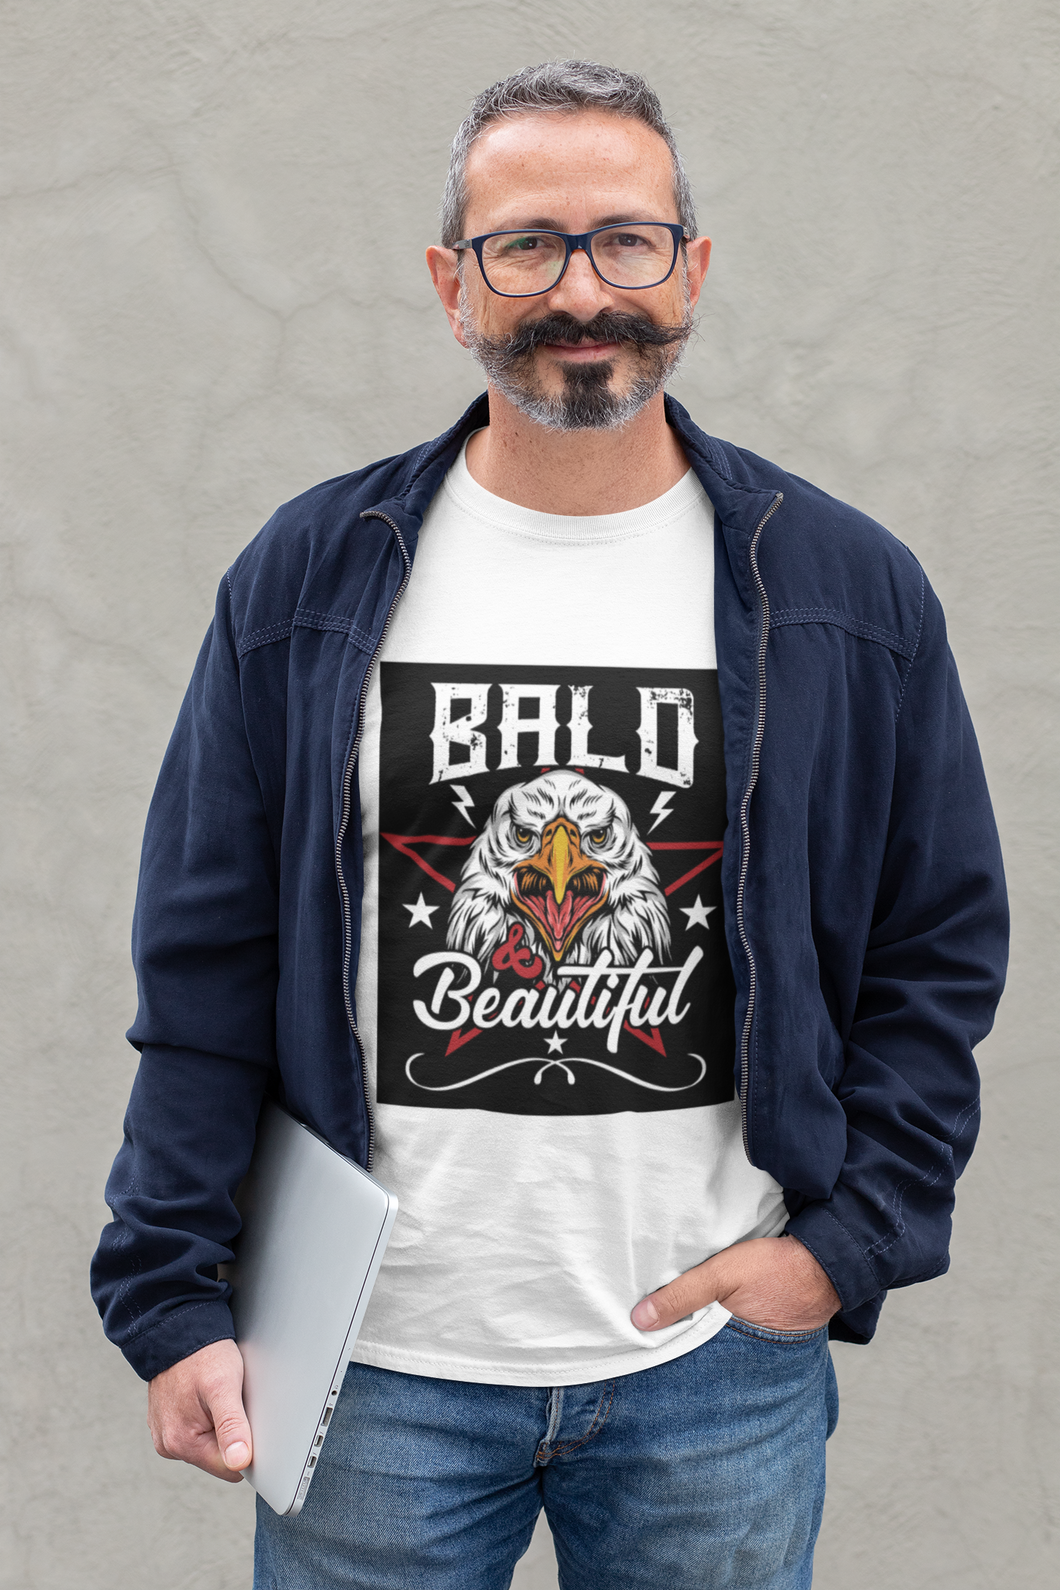 Bald & Beautiful T-shirt, American Patriot shirt